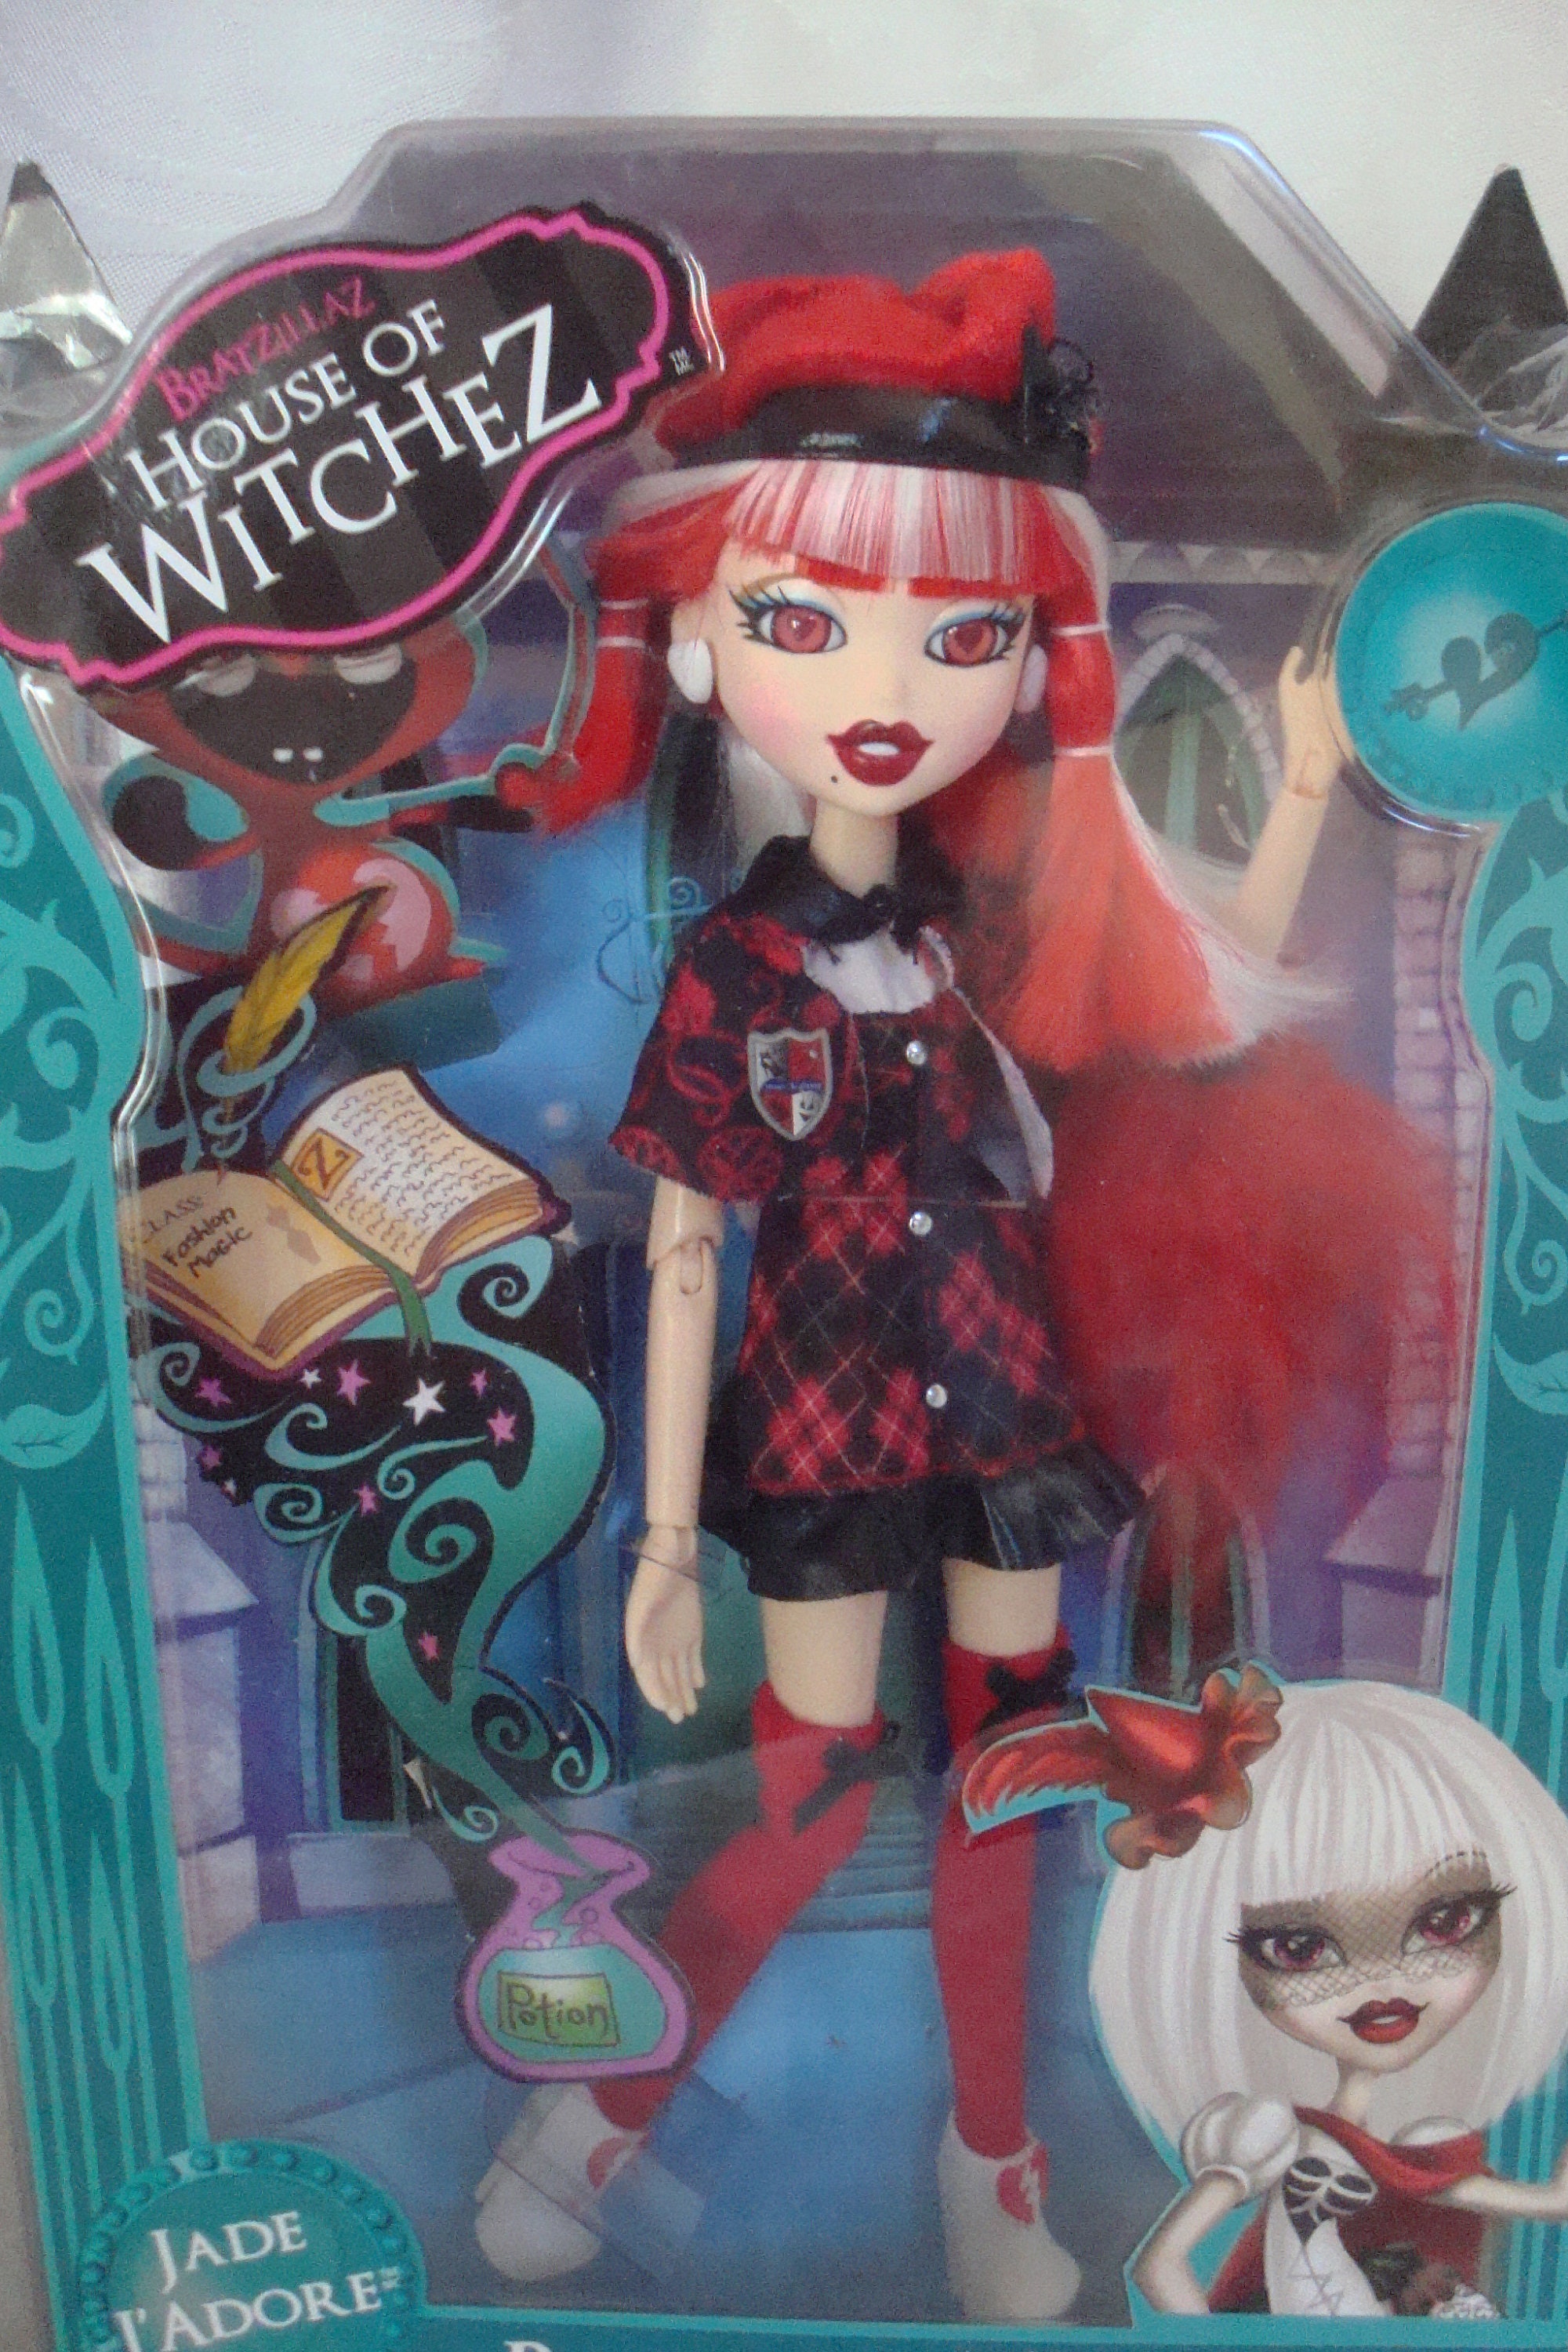 Bratz Bratzillaz Jade J'adore Doll Back to Magic House of Witchez Set as Is  